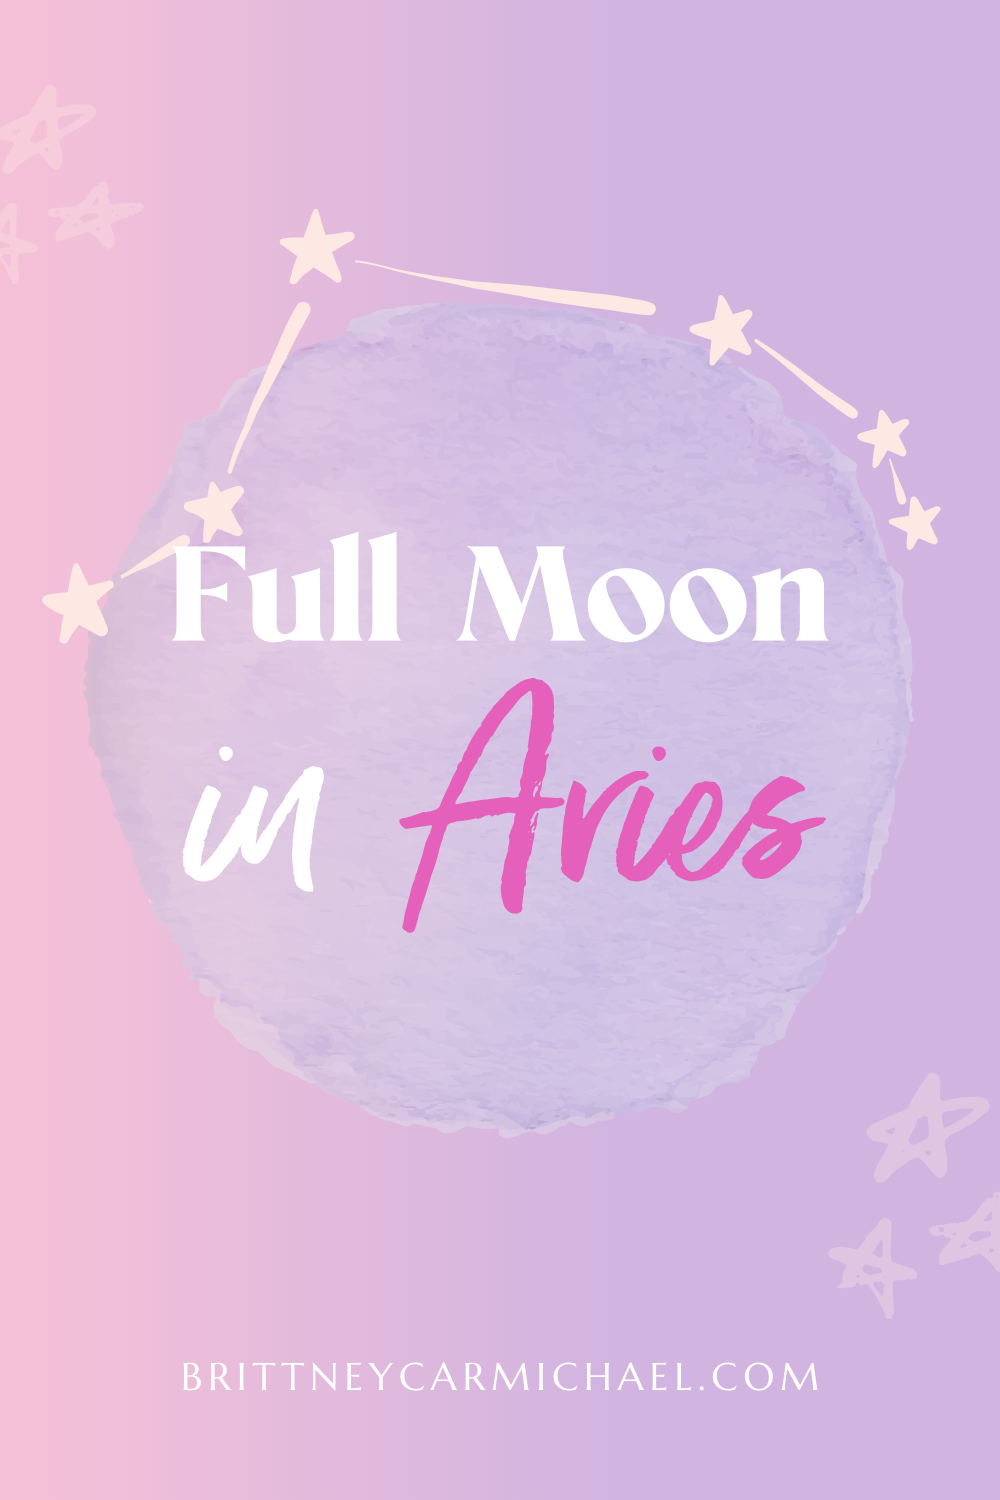 Happy Full Moon in Aries 2017 - Brittney Carmichael